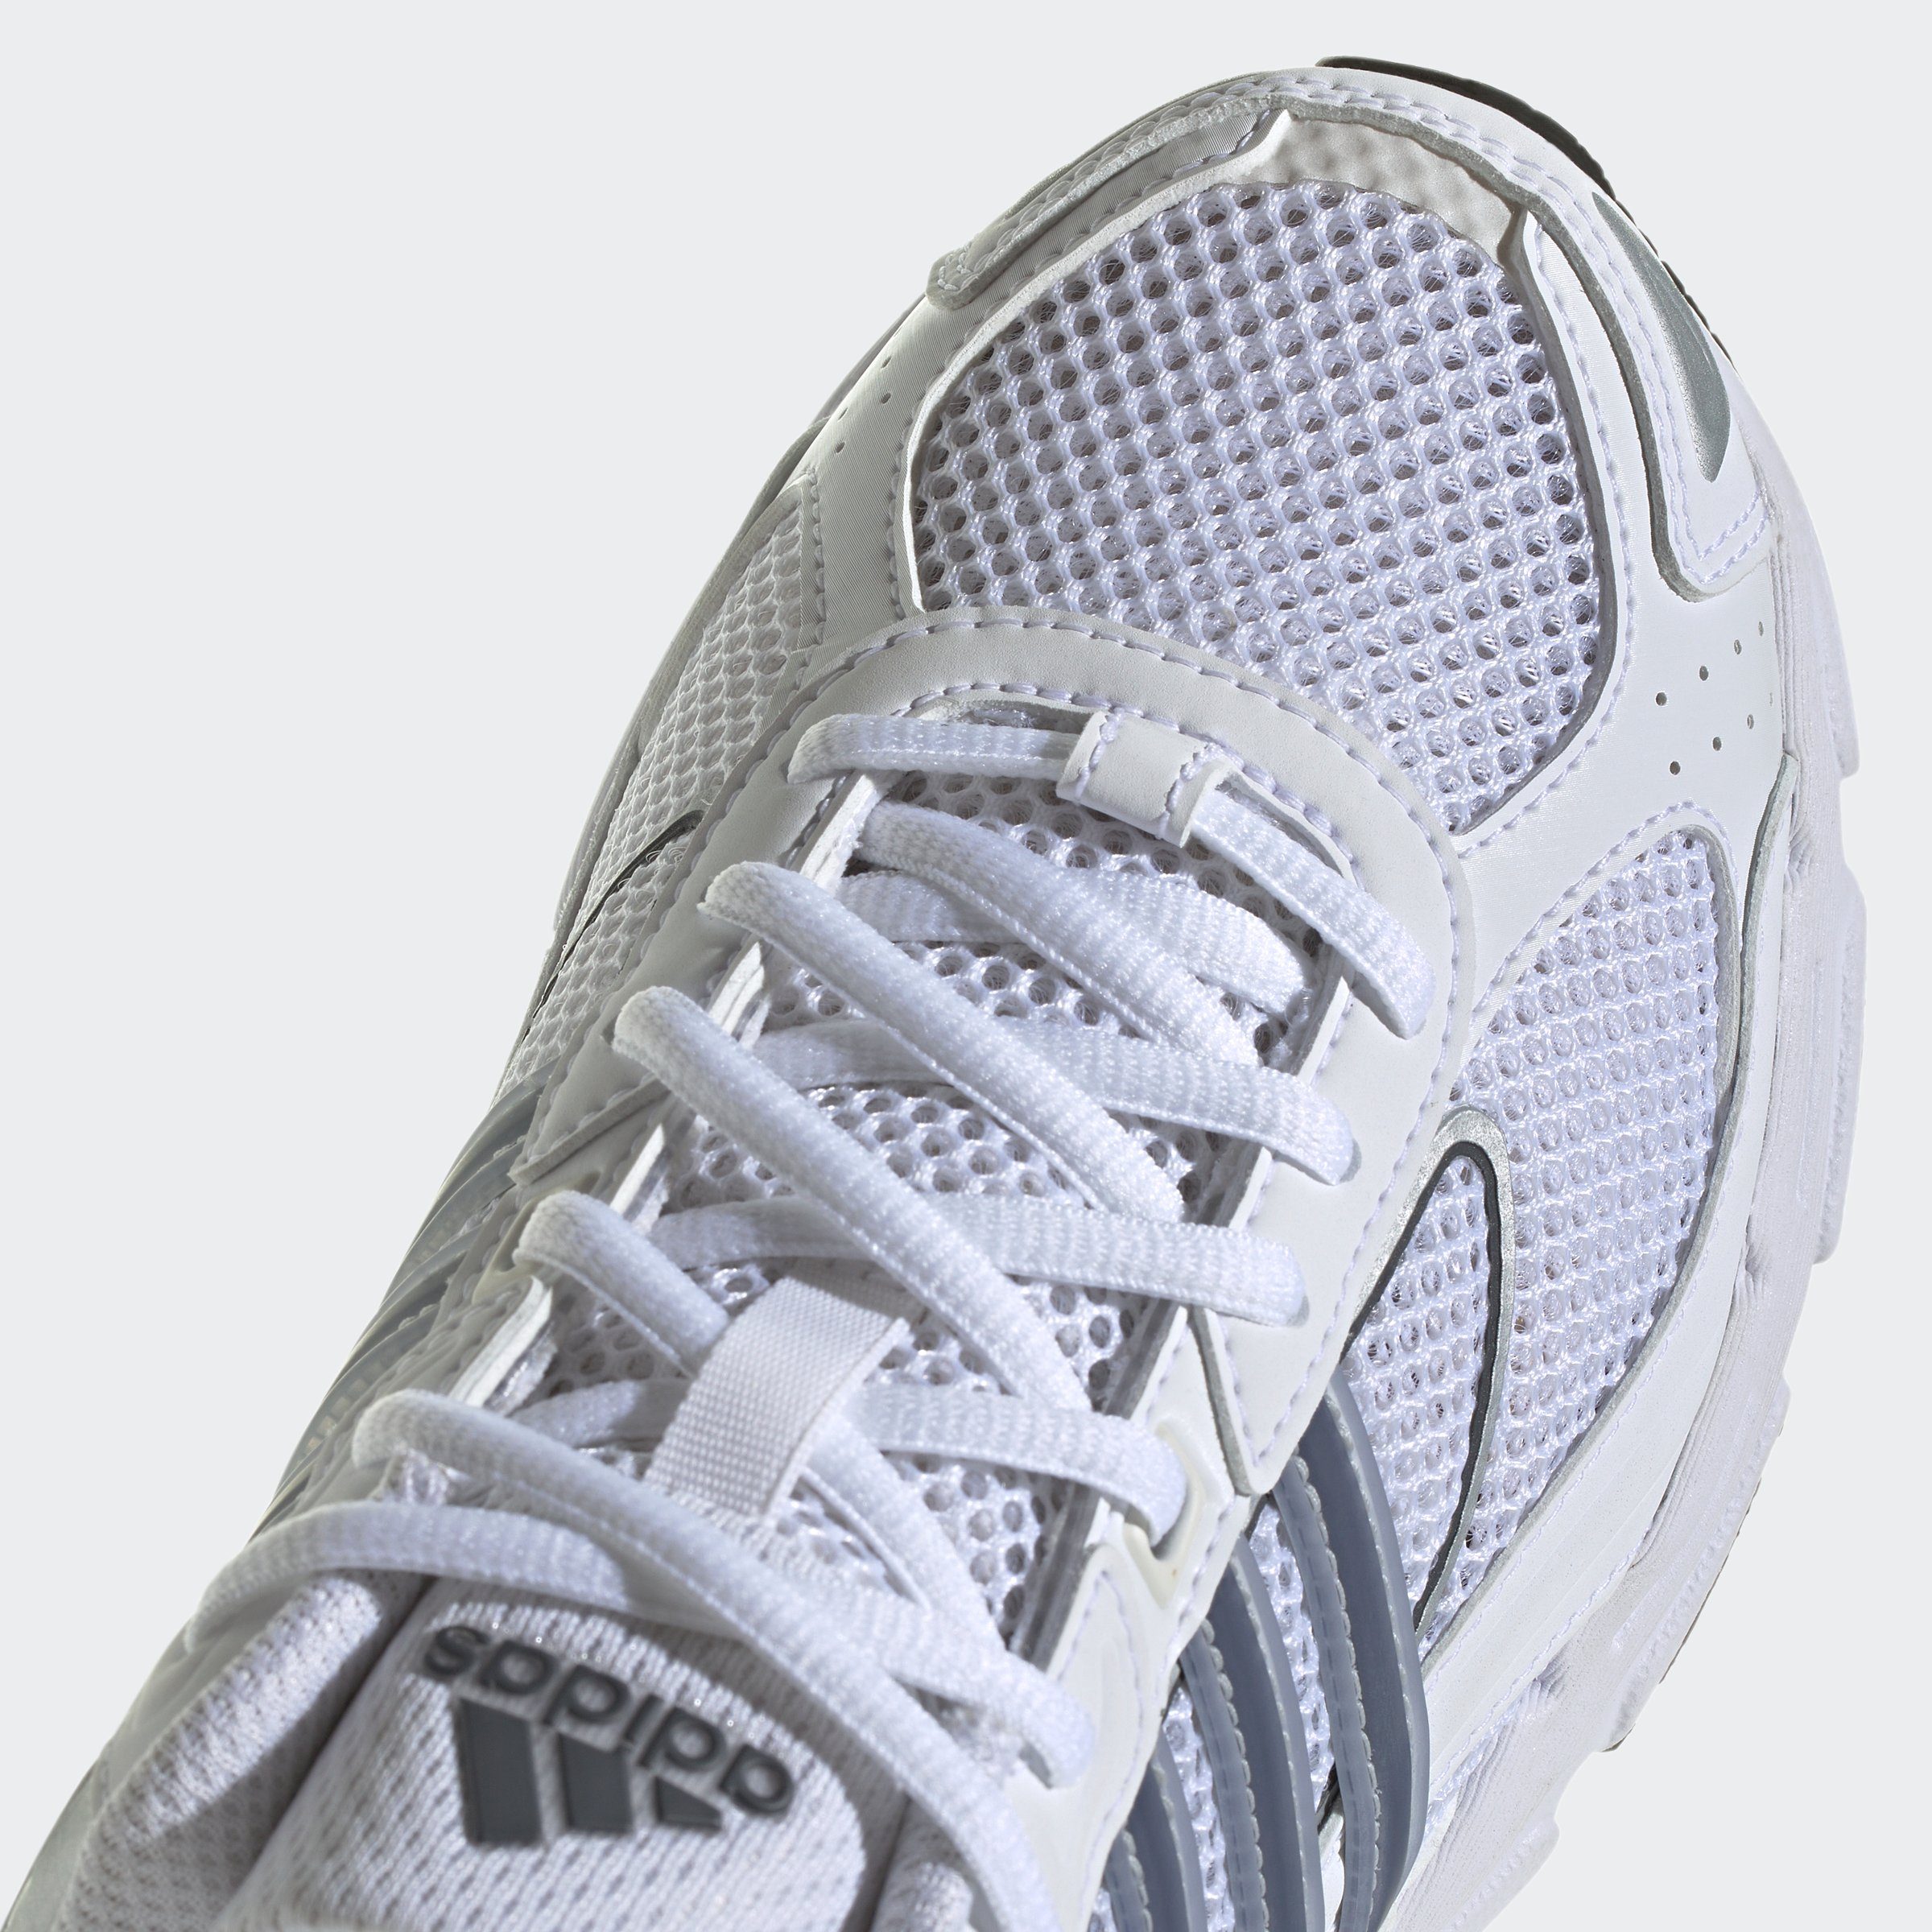 Grey Core Black Originals White Five adidas Sneaker Cloud / RESPONSE /